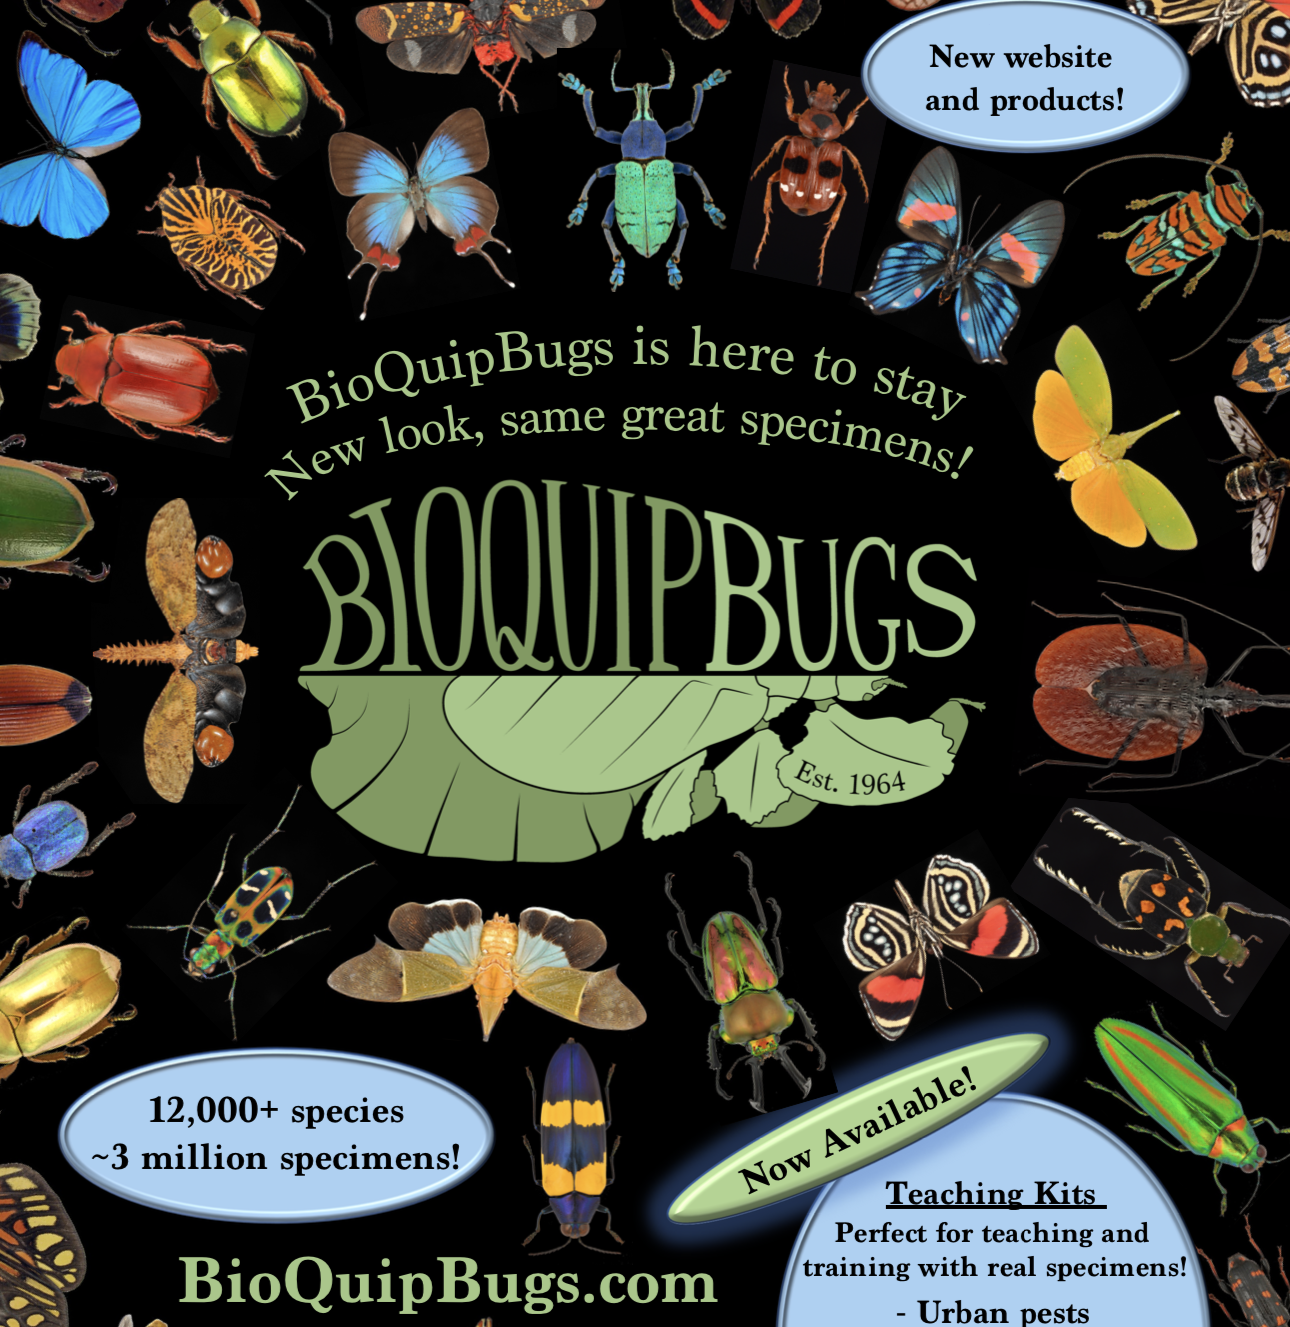 November issue of American Entomologist